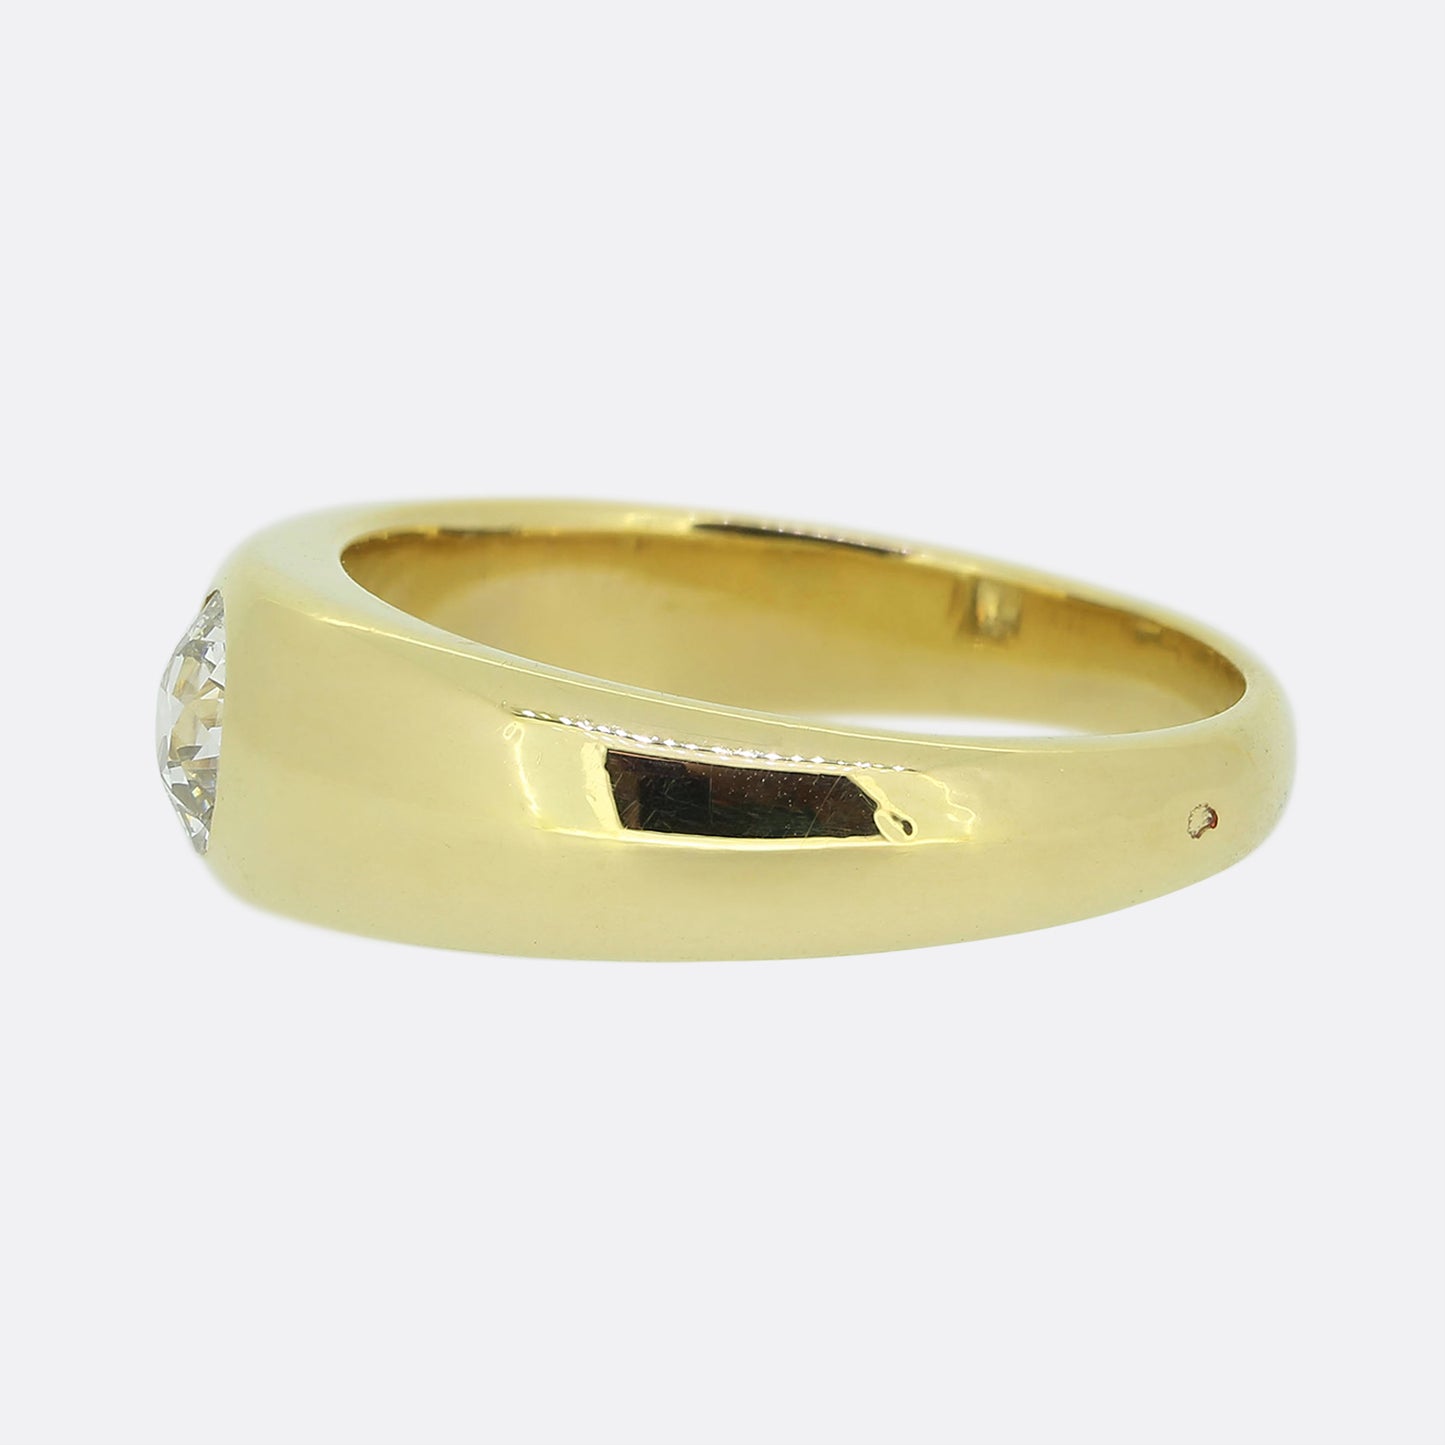 Vintage 0.80 Carat Old Cut Diamond Ring